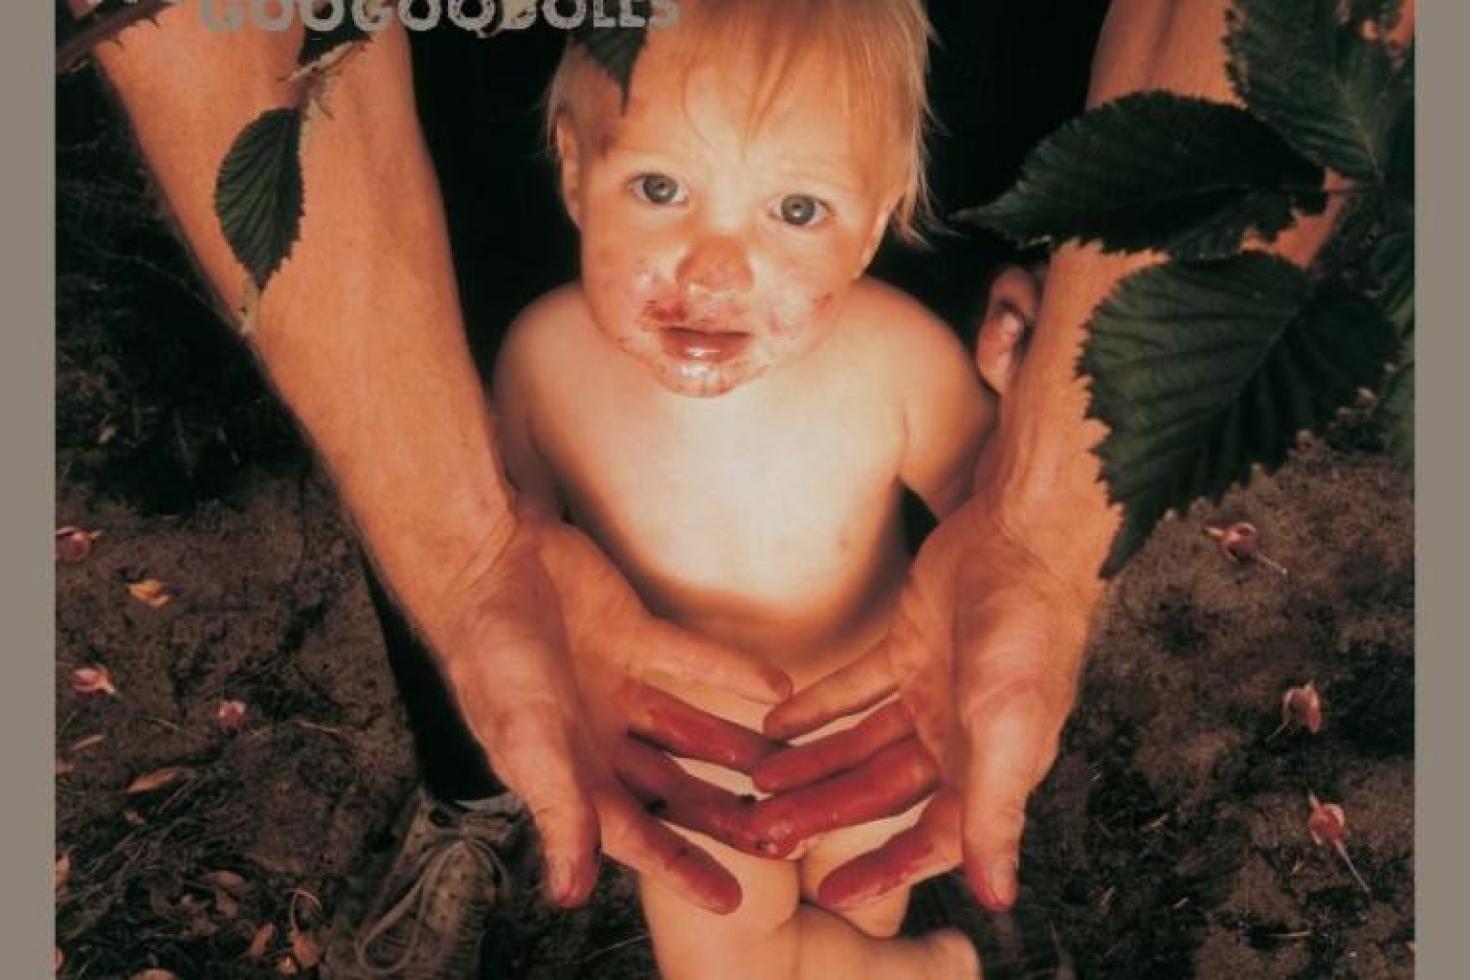 Goo Goo Dolls - A Boy Named Goo 20th Anniversary Edition